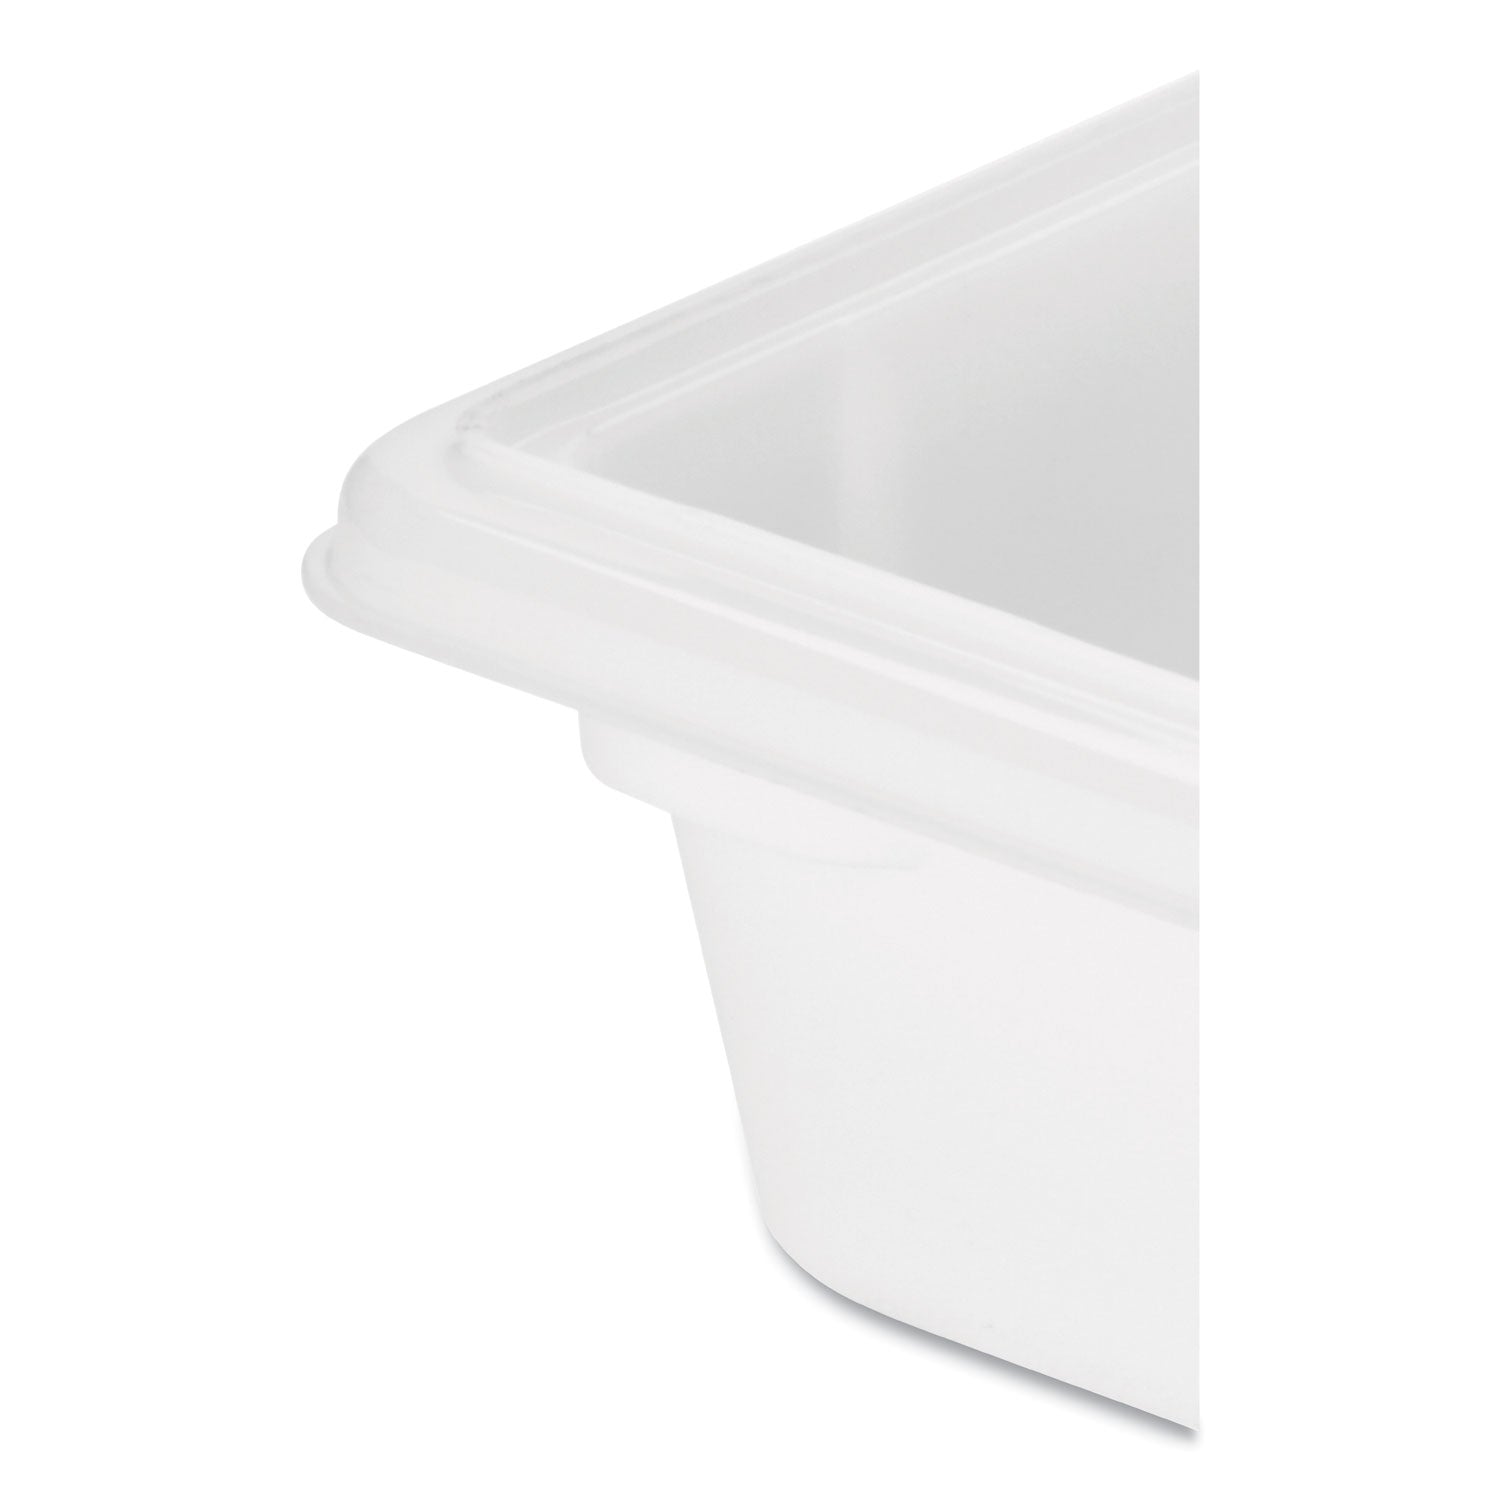 Food/Tote Boxes, 3.5 gal, 18 x 12 x 6, White, Plastic - 